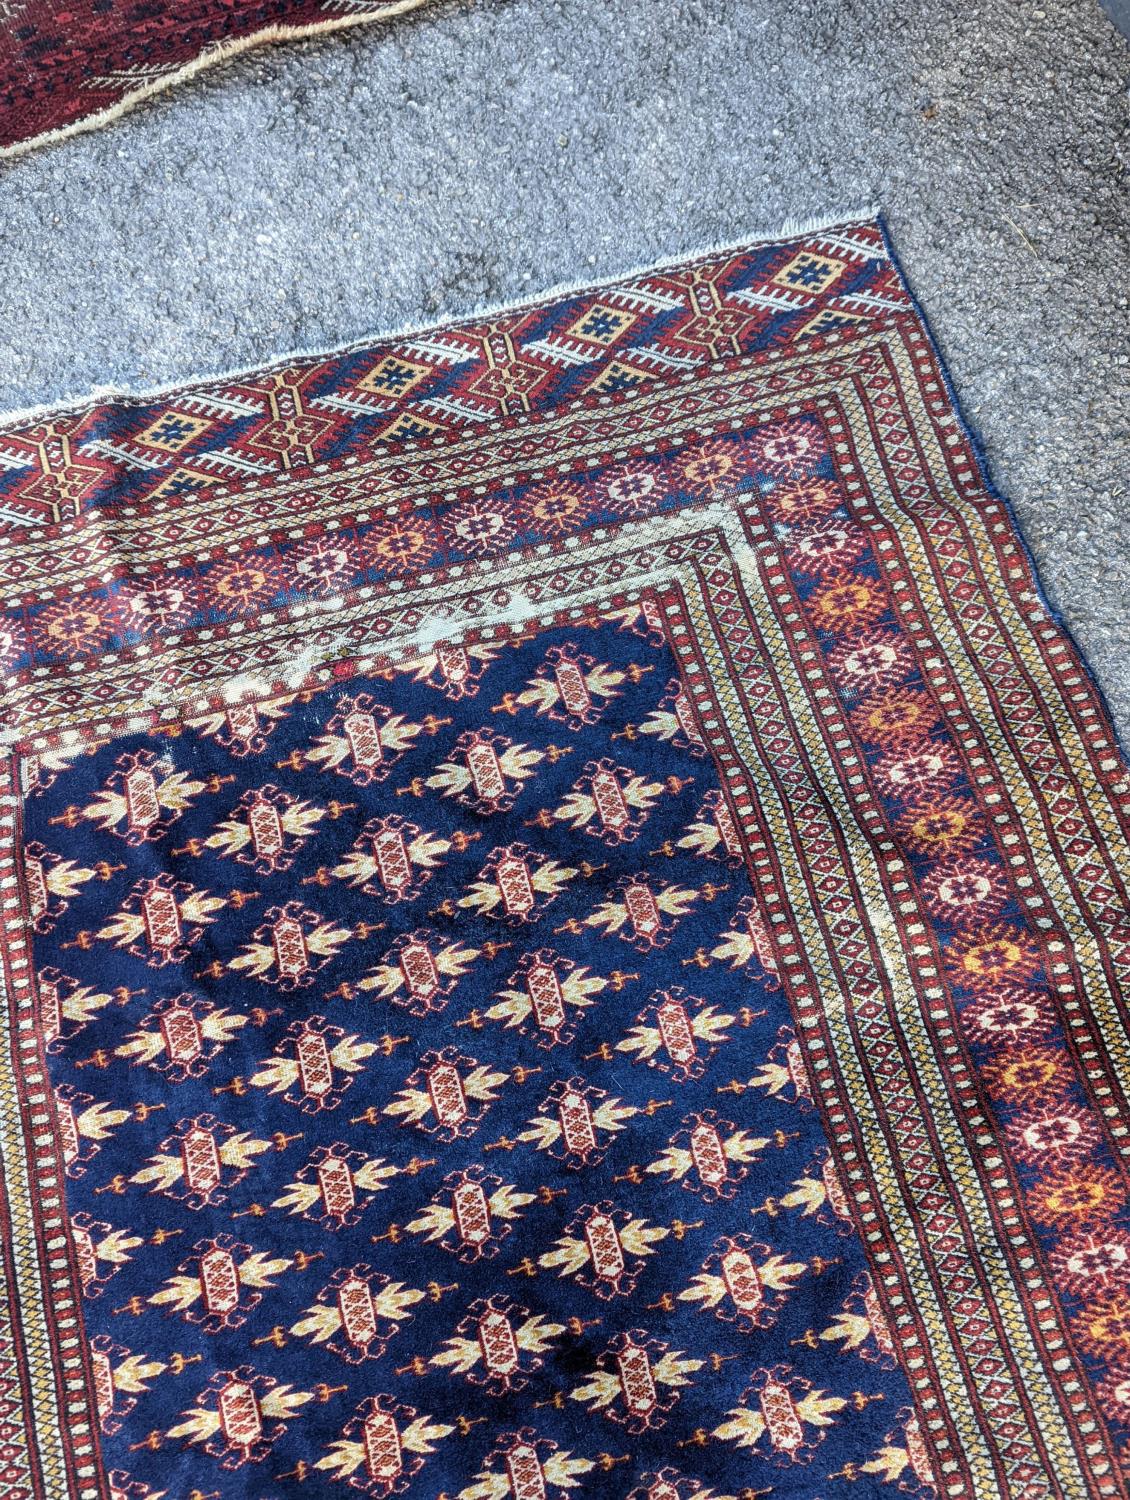 A Bokhara blue ground rug, 191 x 126cm - Image 5 of 6